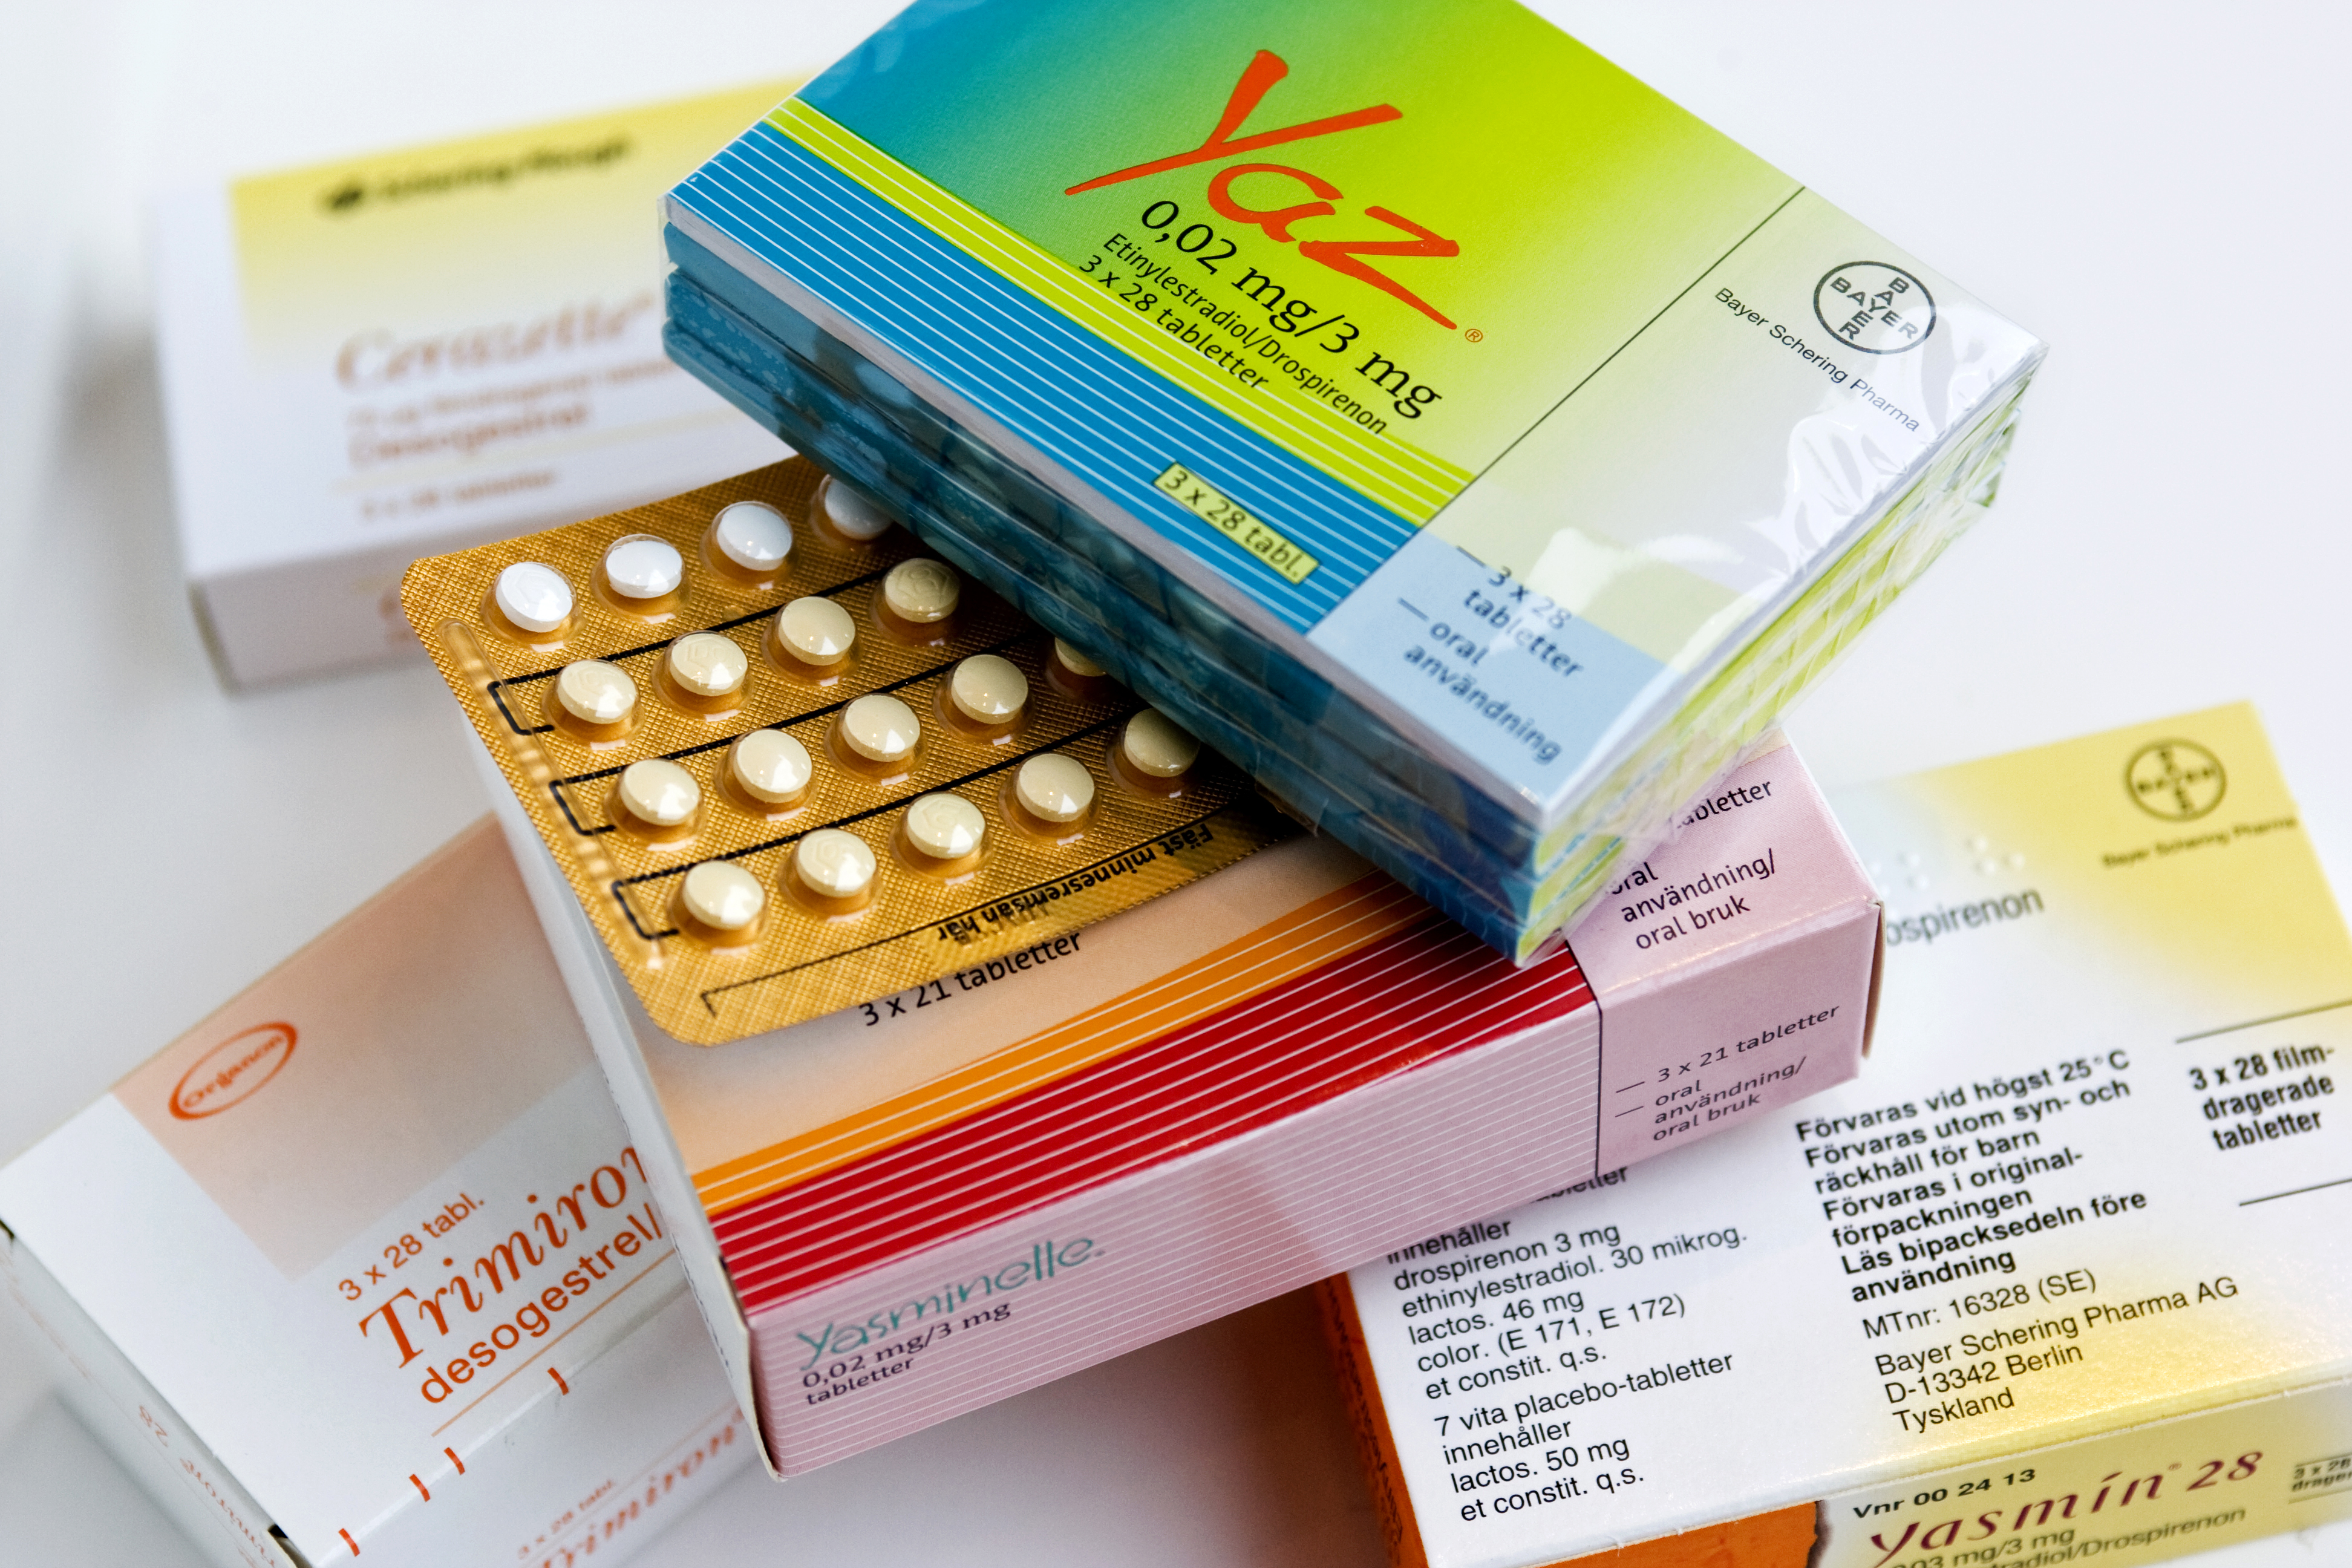 P-piller, Gravid, Preventivmedel